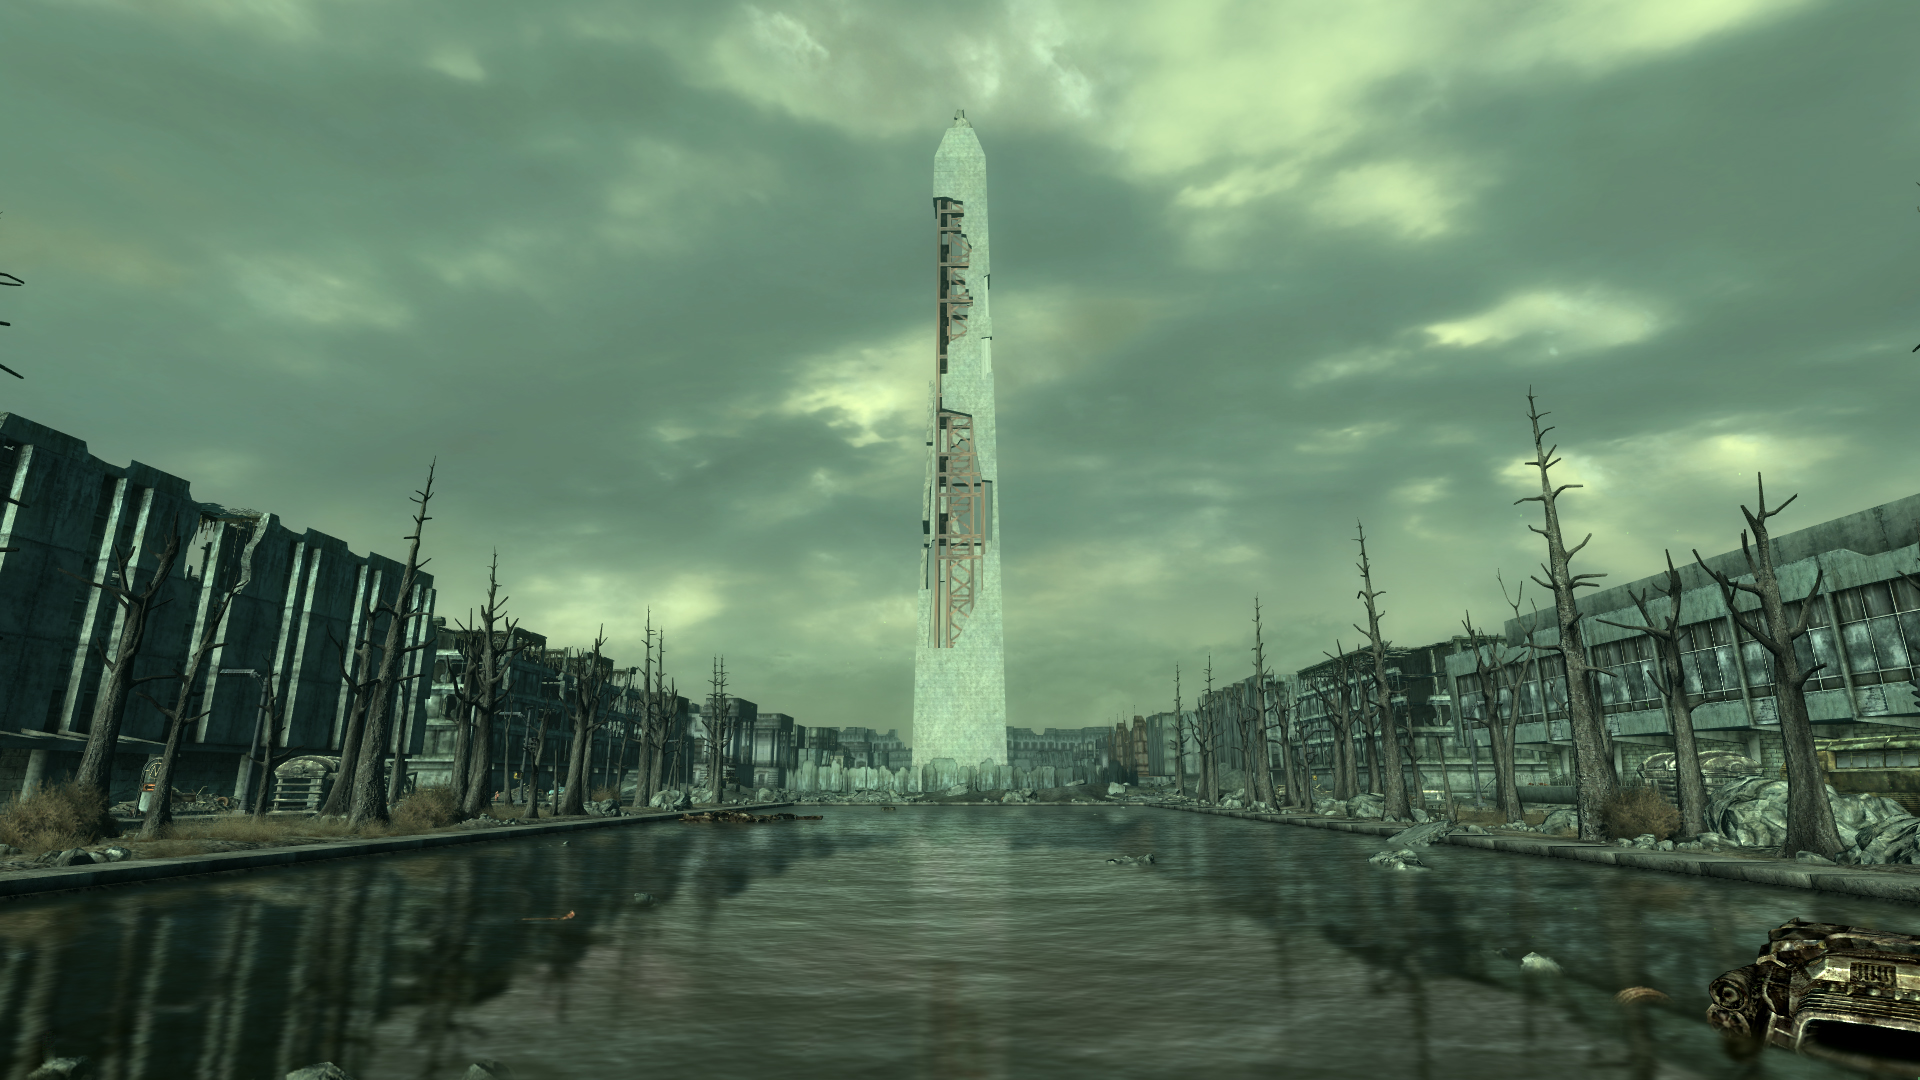 Fallout 3 high resolution maps, Fallout Wiki